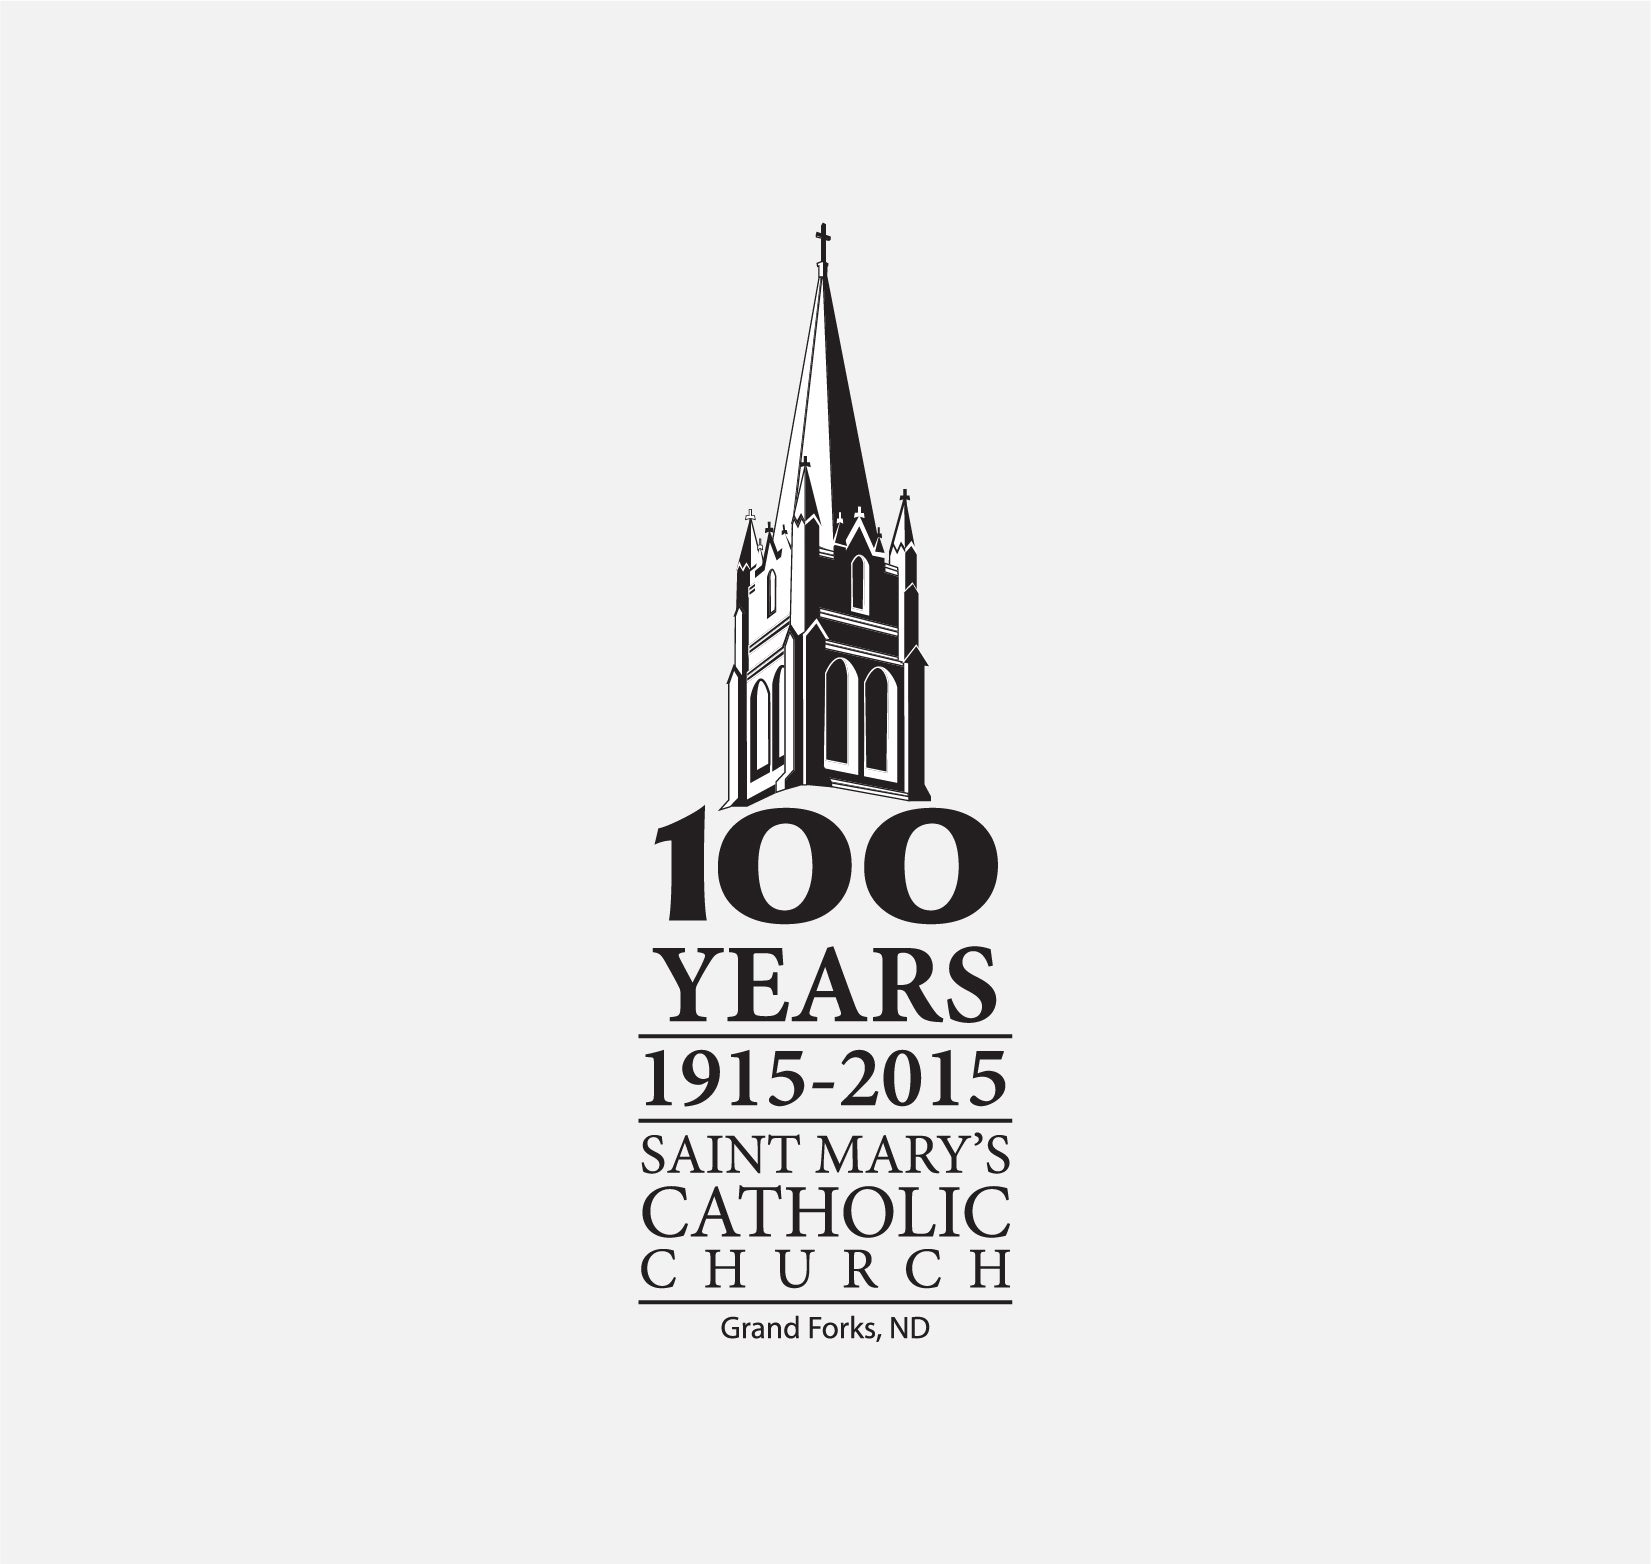 St Mary's Catholic Church 100 Years logo